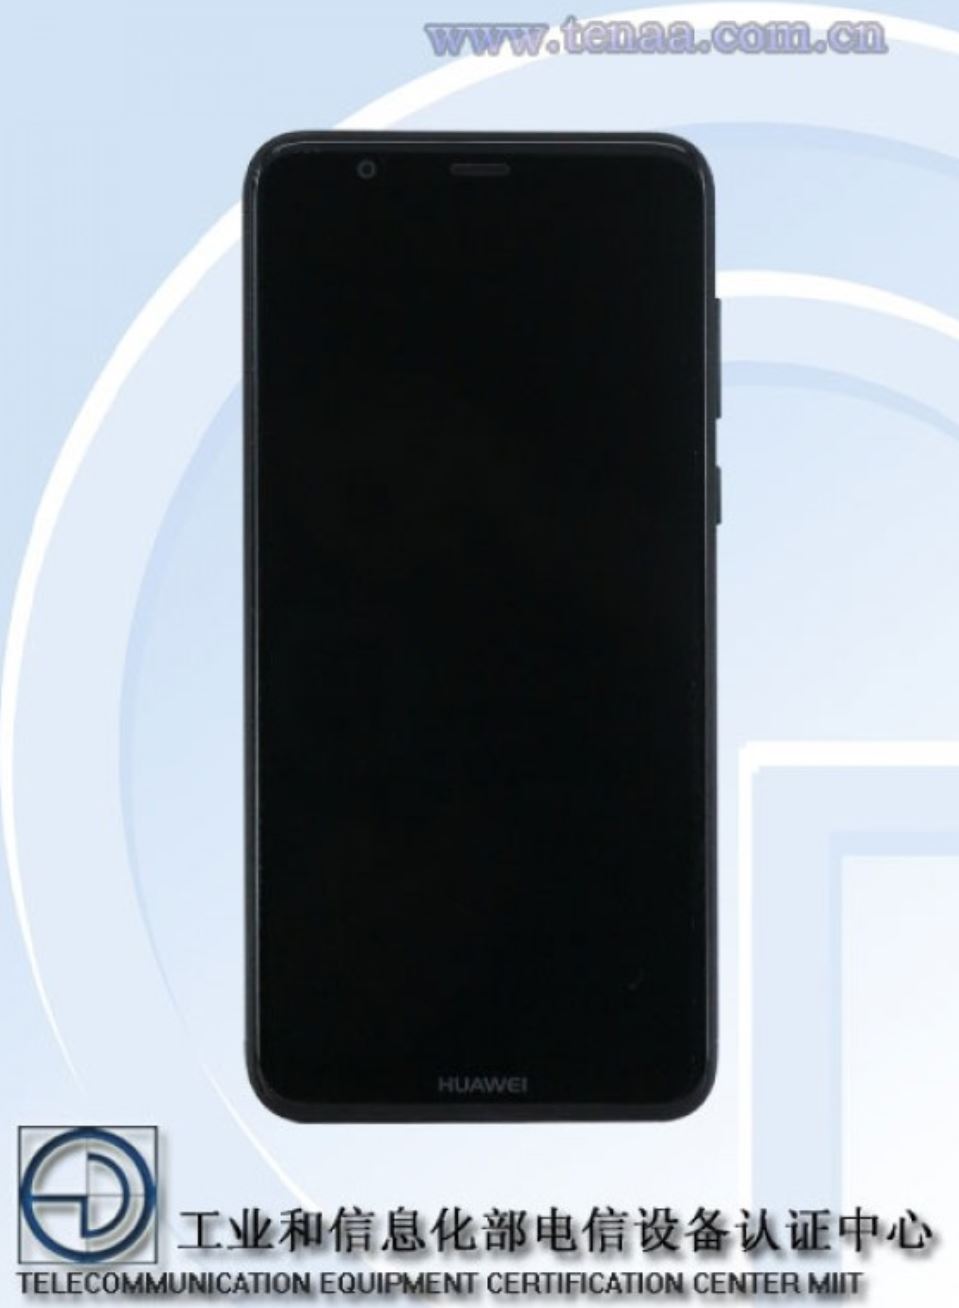 Huawei phone that appeared on TENAA